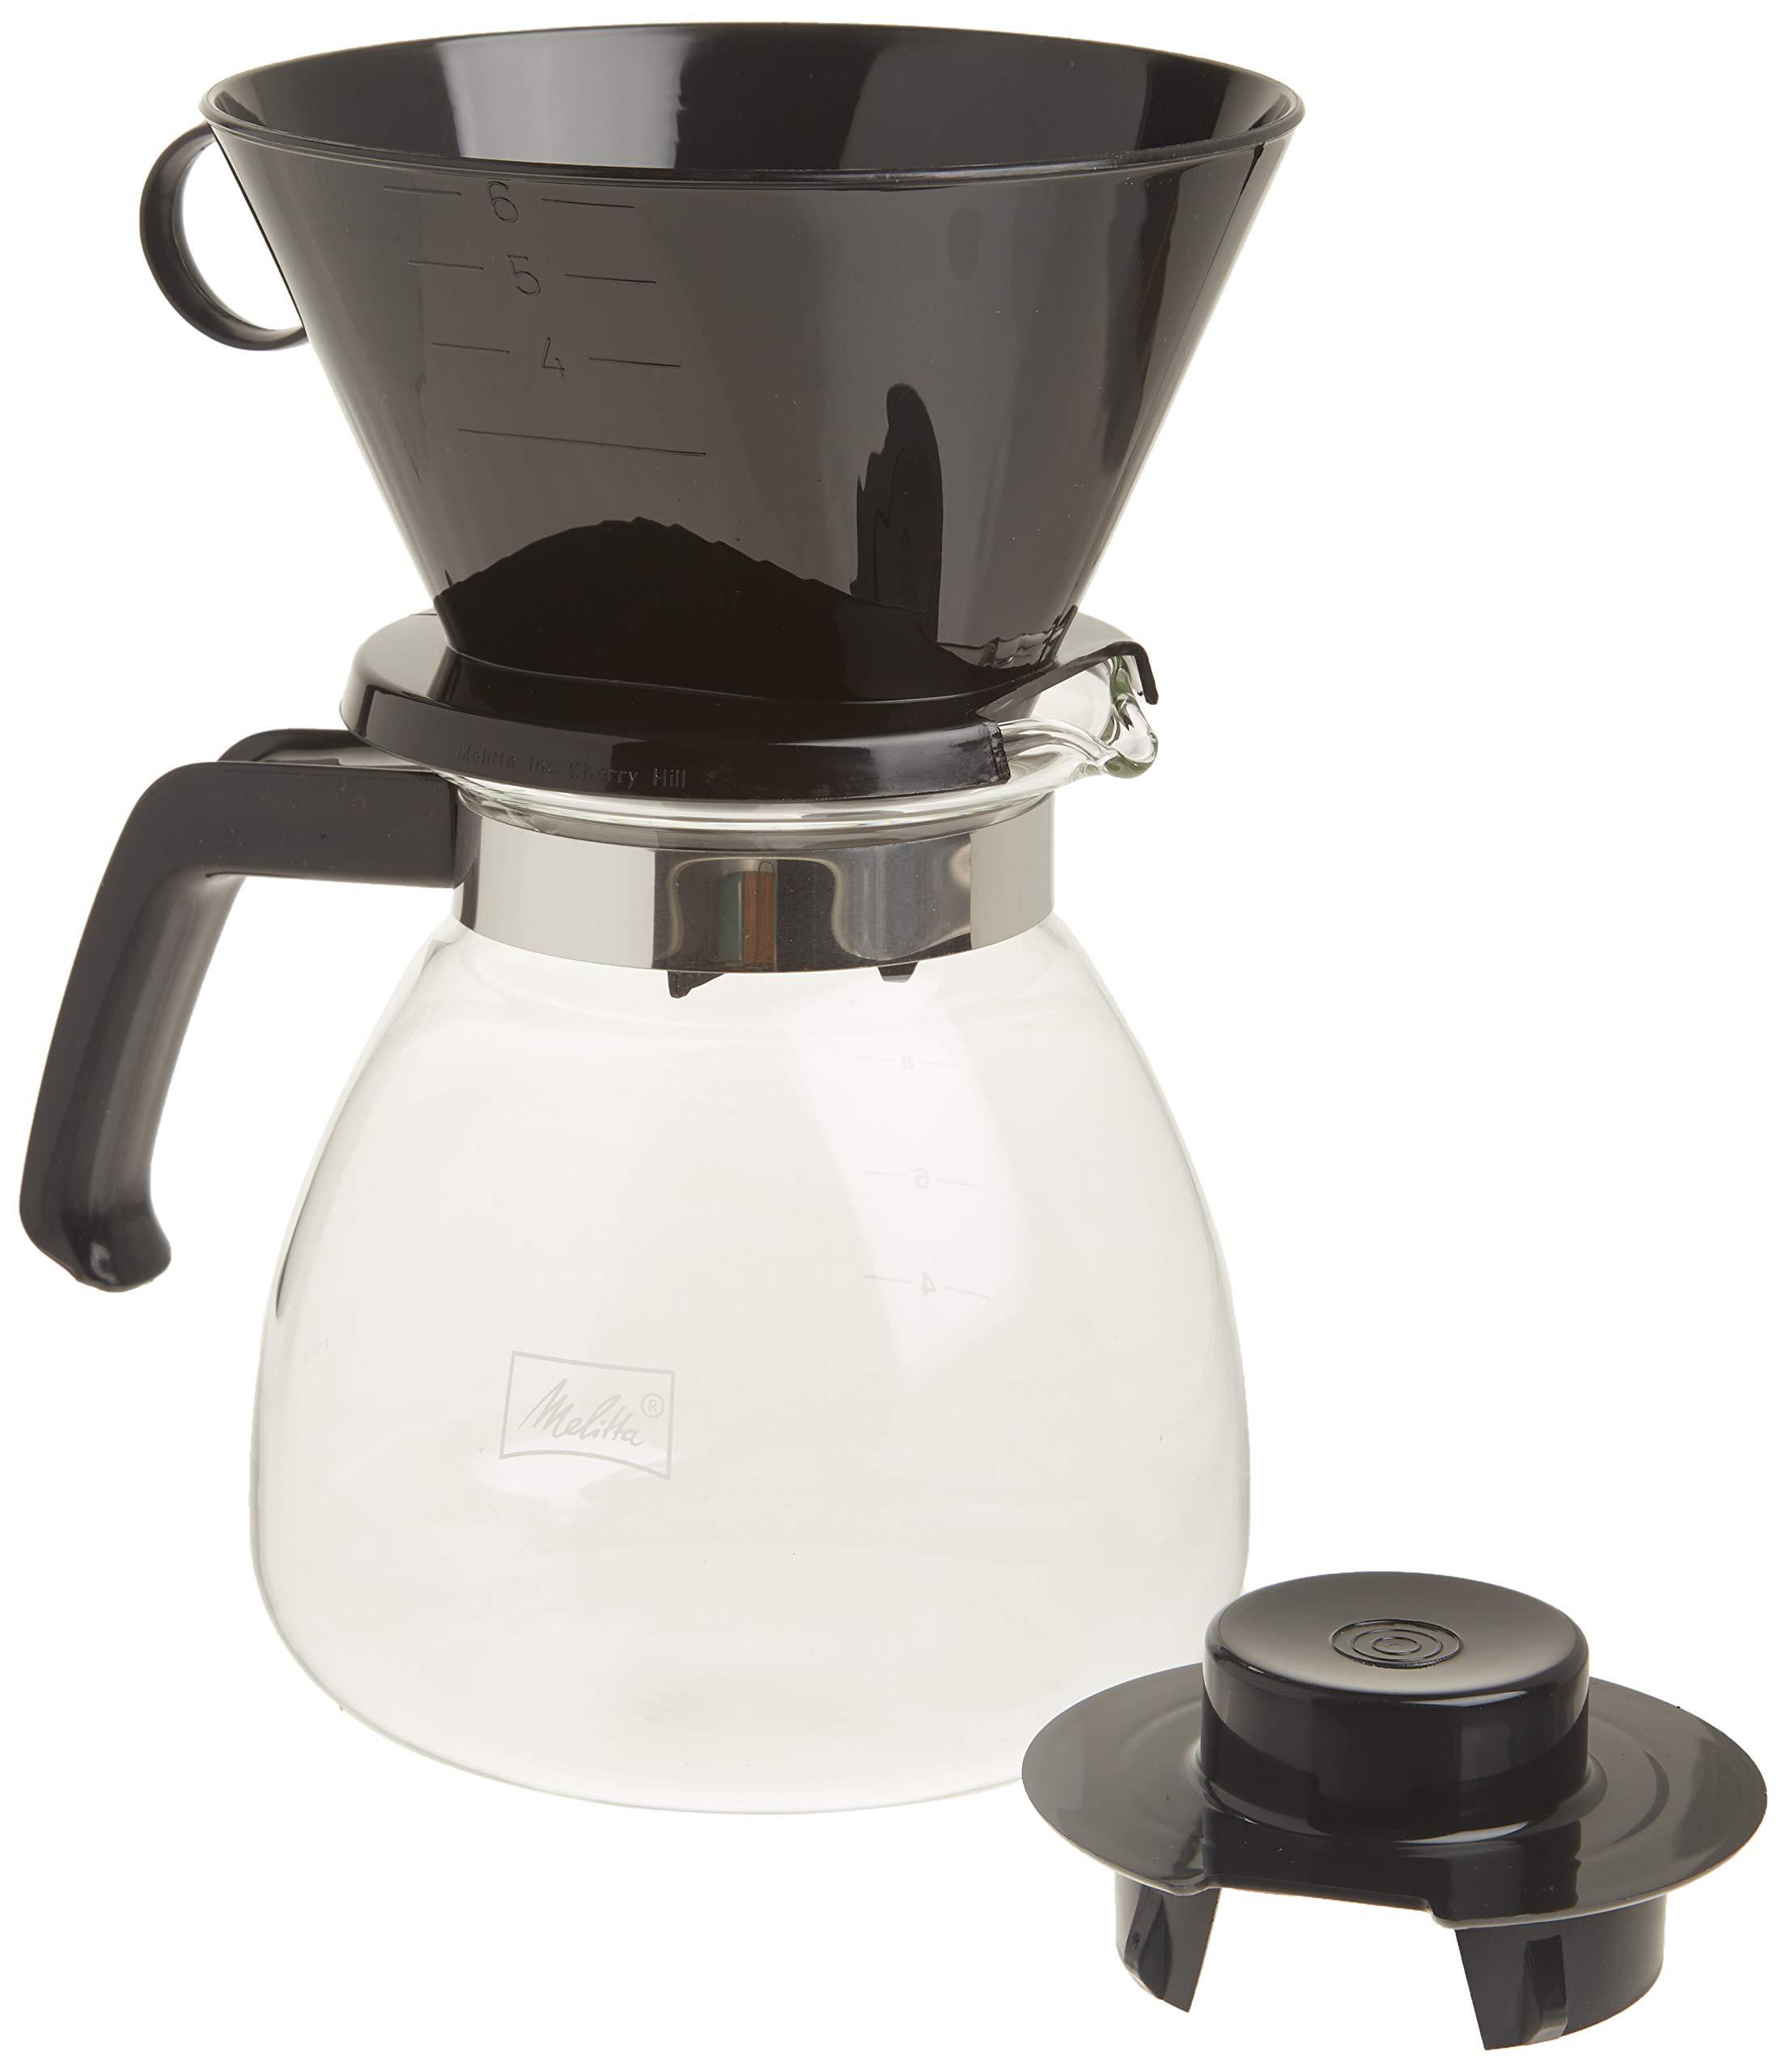 melitta 640616 coffee maker, 52 oz, glass carafe